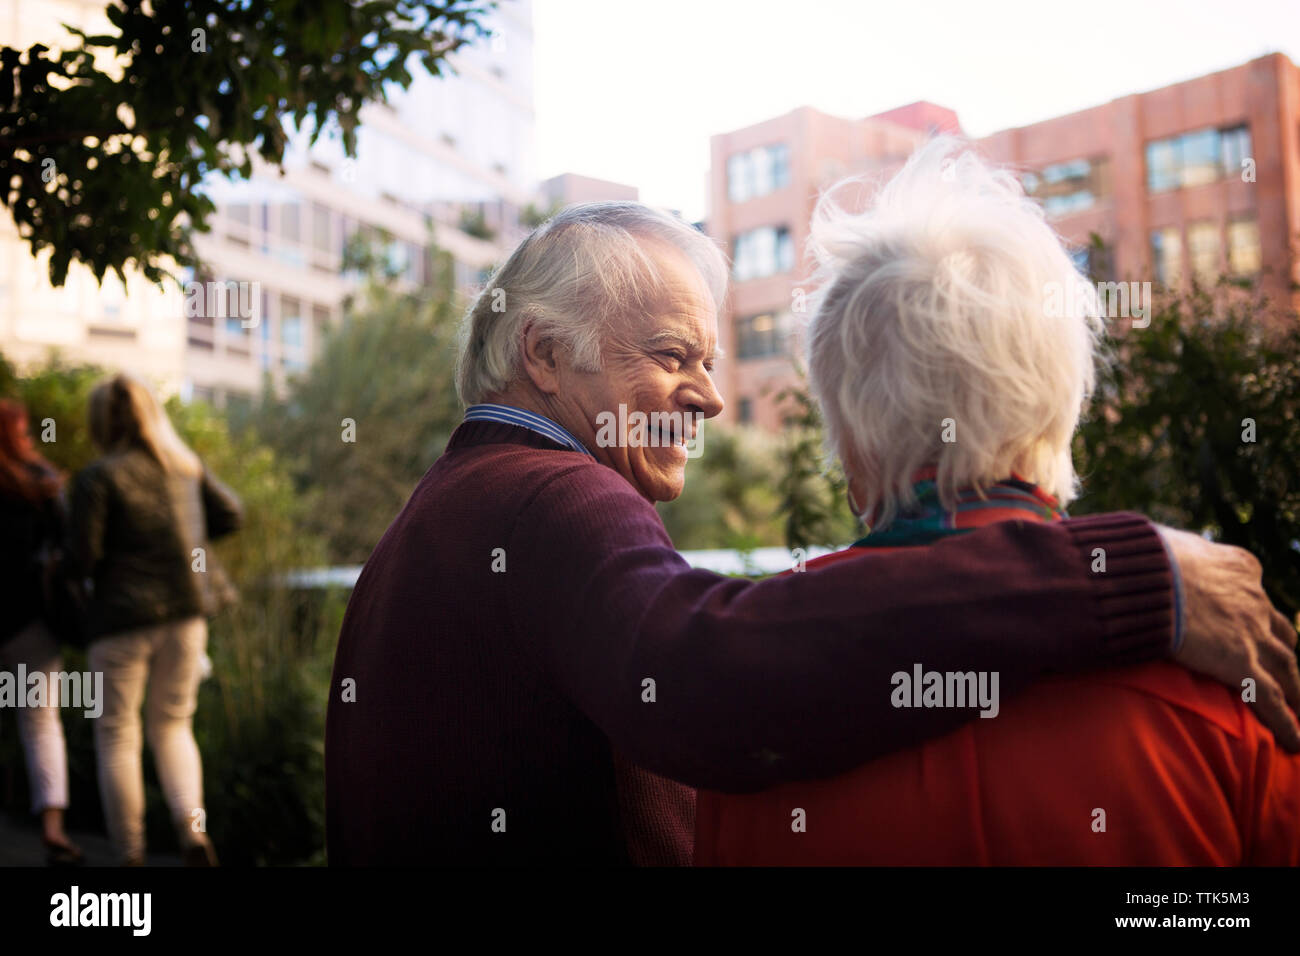 Happy senior man with arm around woman in city Stock Photo